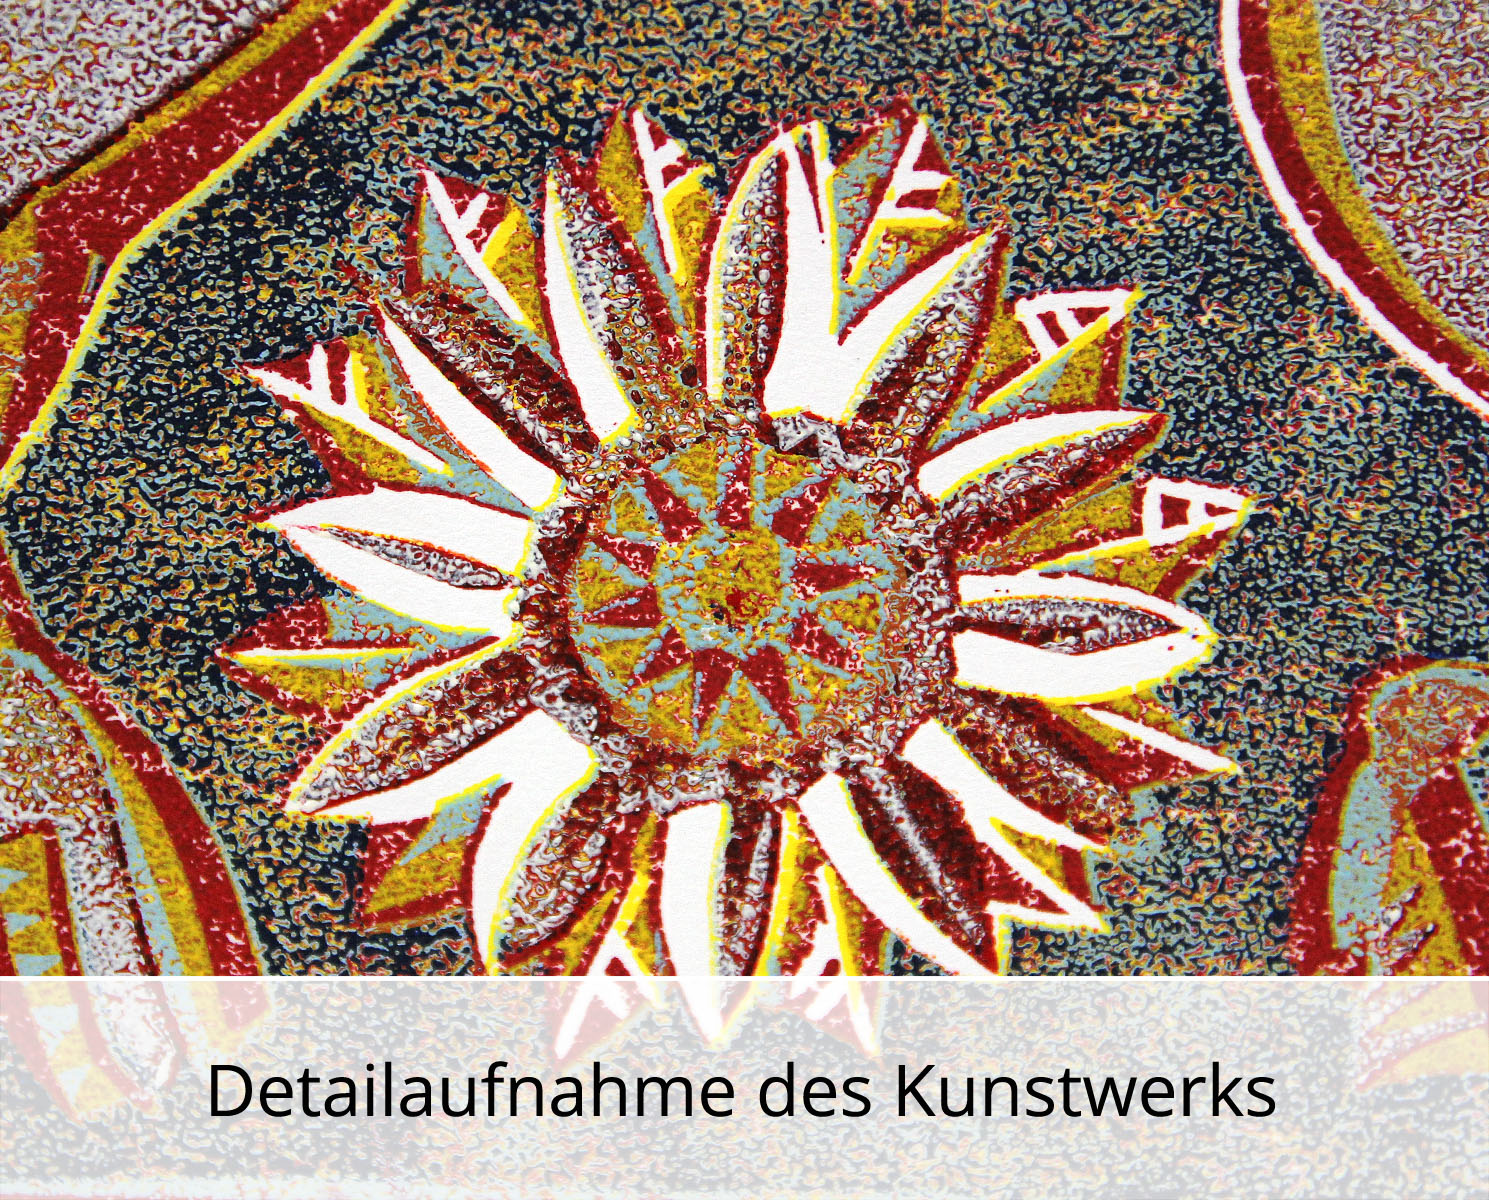 F.O. Haake: "Drei Schwäne - Blatt 05/22", originale Grafik/serielles Unikat, mehrfarbiger Linoldruck